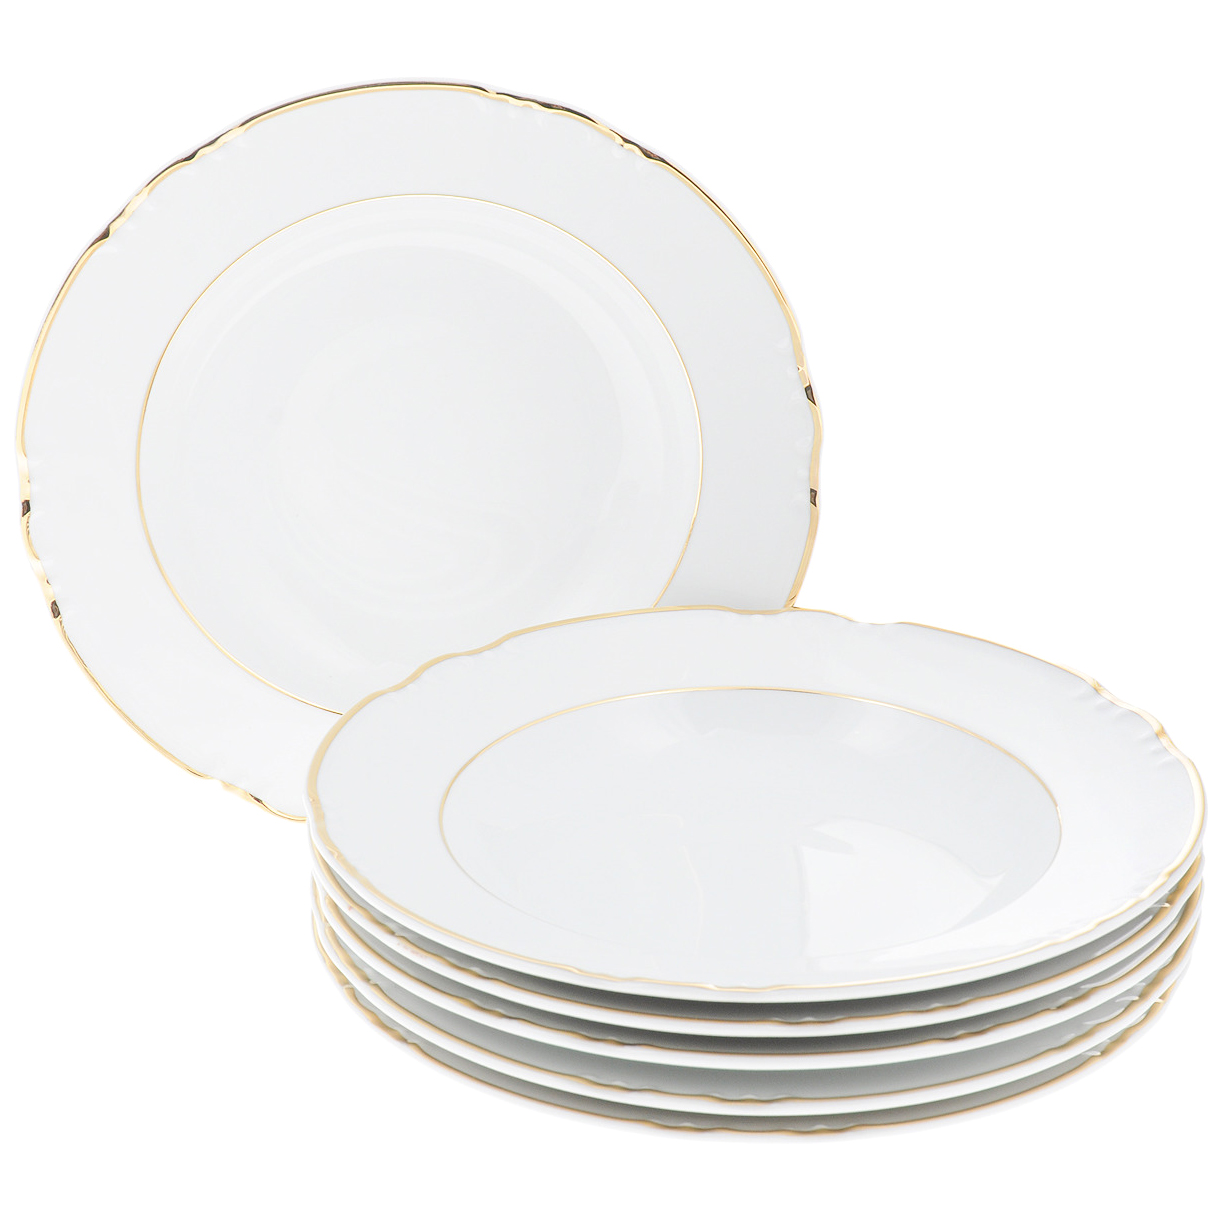 Набор мелких тарелок Thun Constance 21 см 6 шт набор тарелок мелких соната тонкое золото 25 см 6 шт 07160115 1139 leander